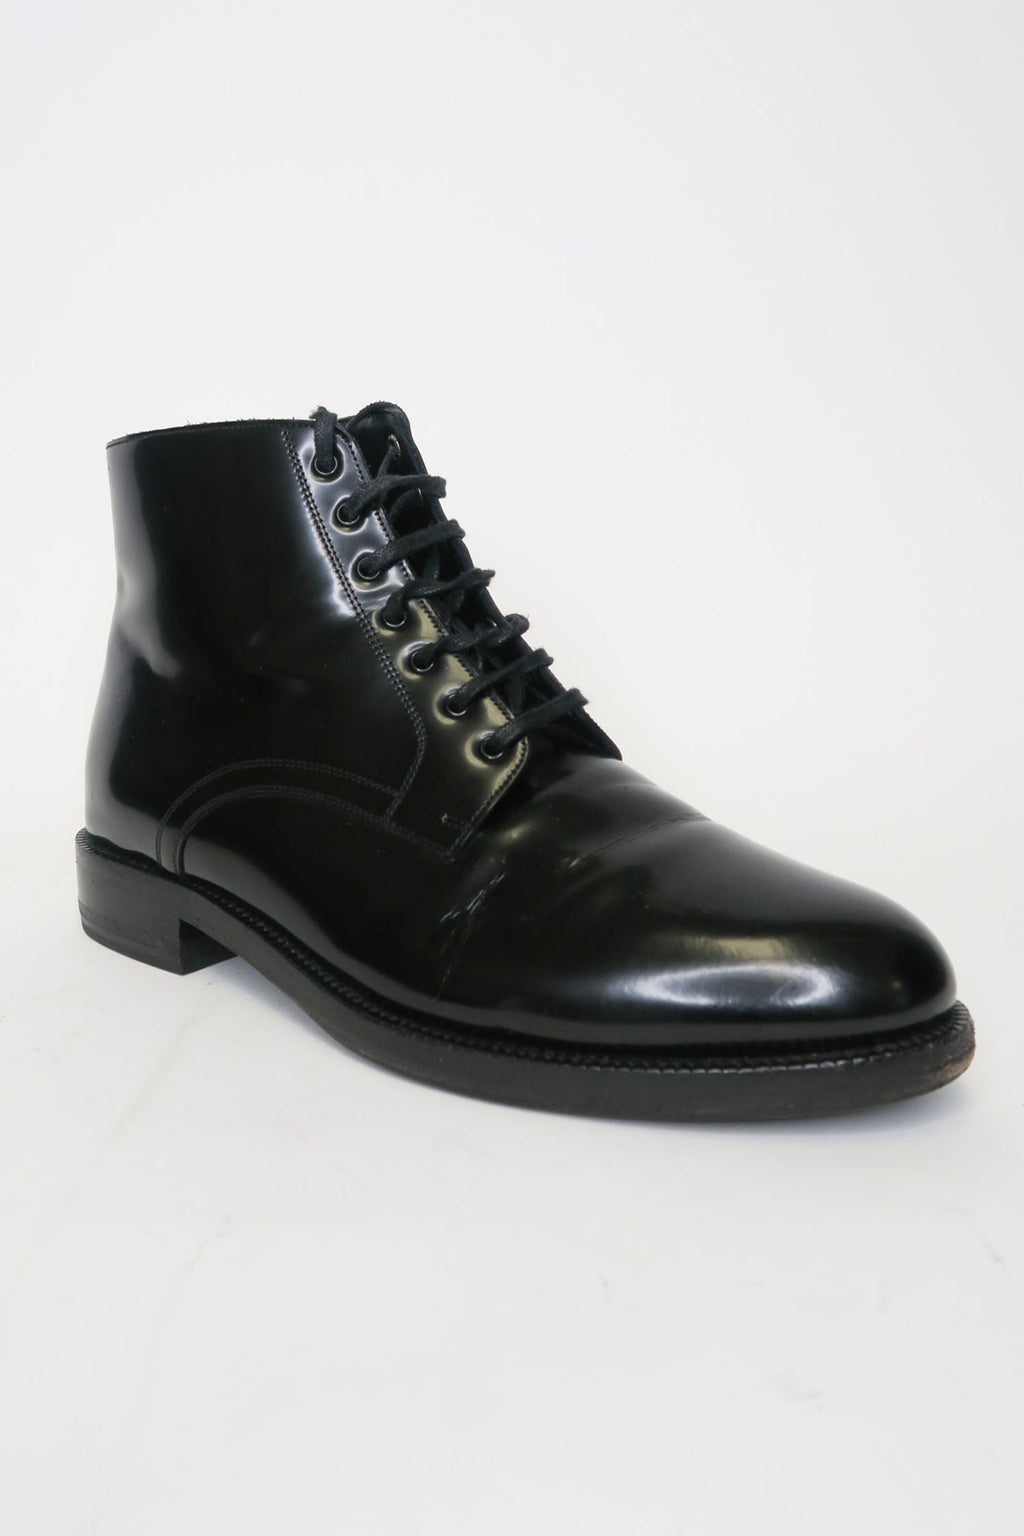 Celine Leather Ankle Lace-Up Boots sz 37.5